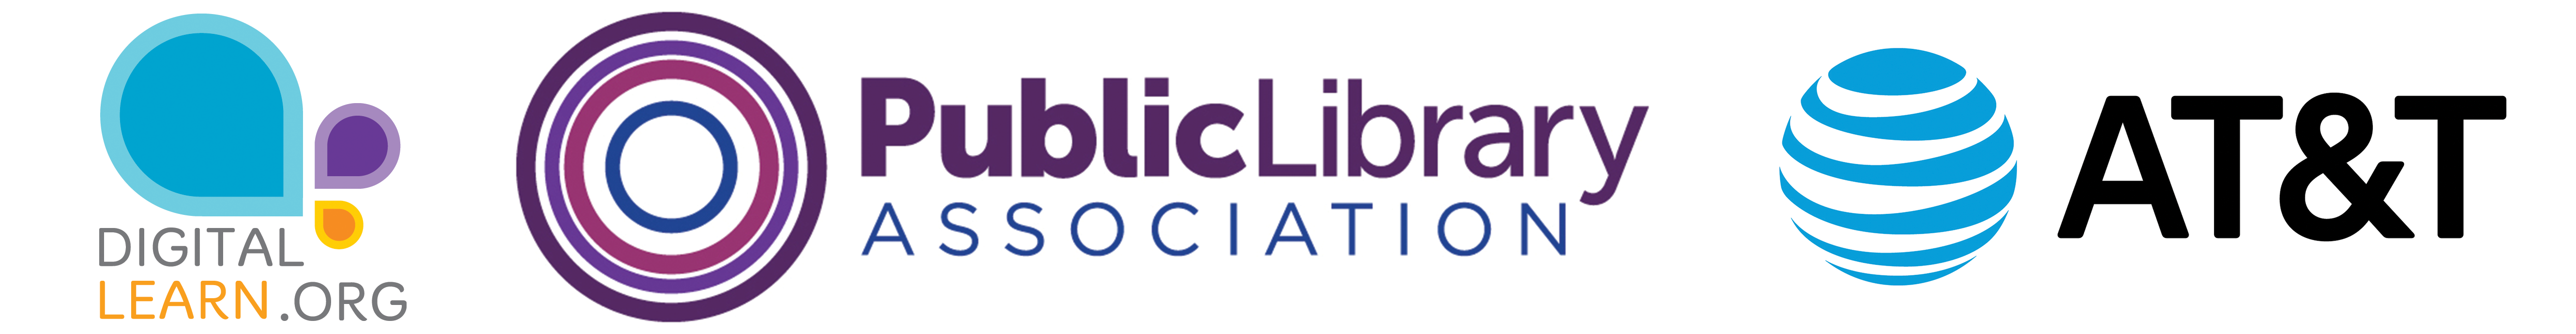 Digital Learn, Public Library Assn, AT&T logos